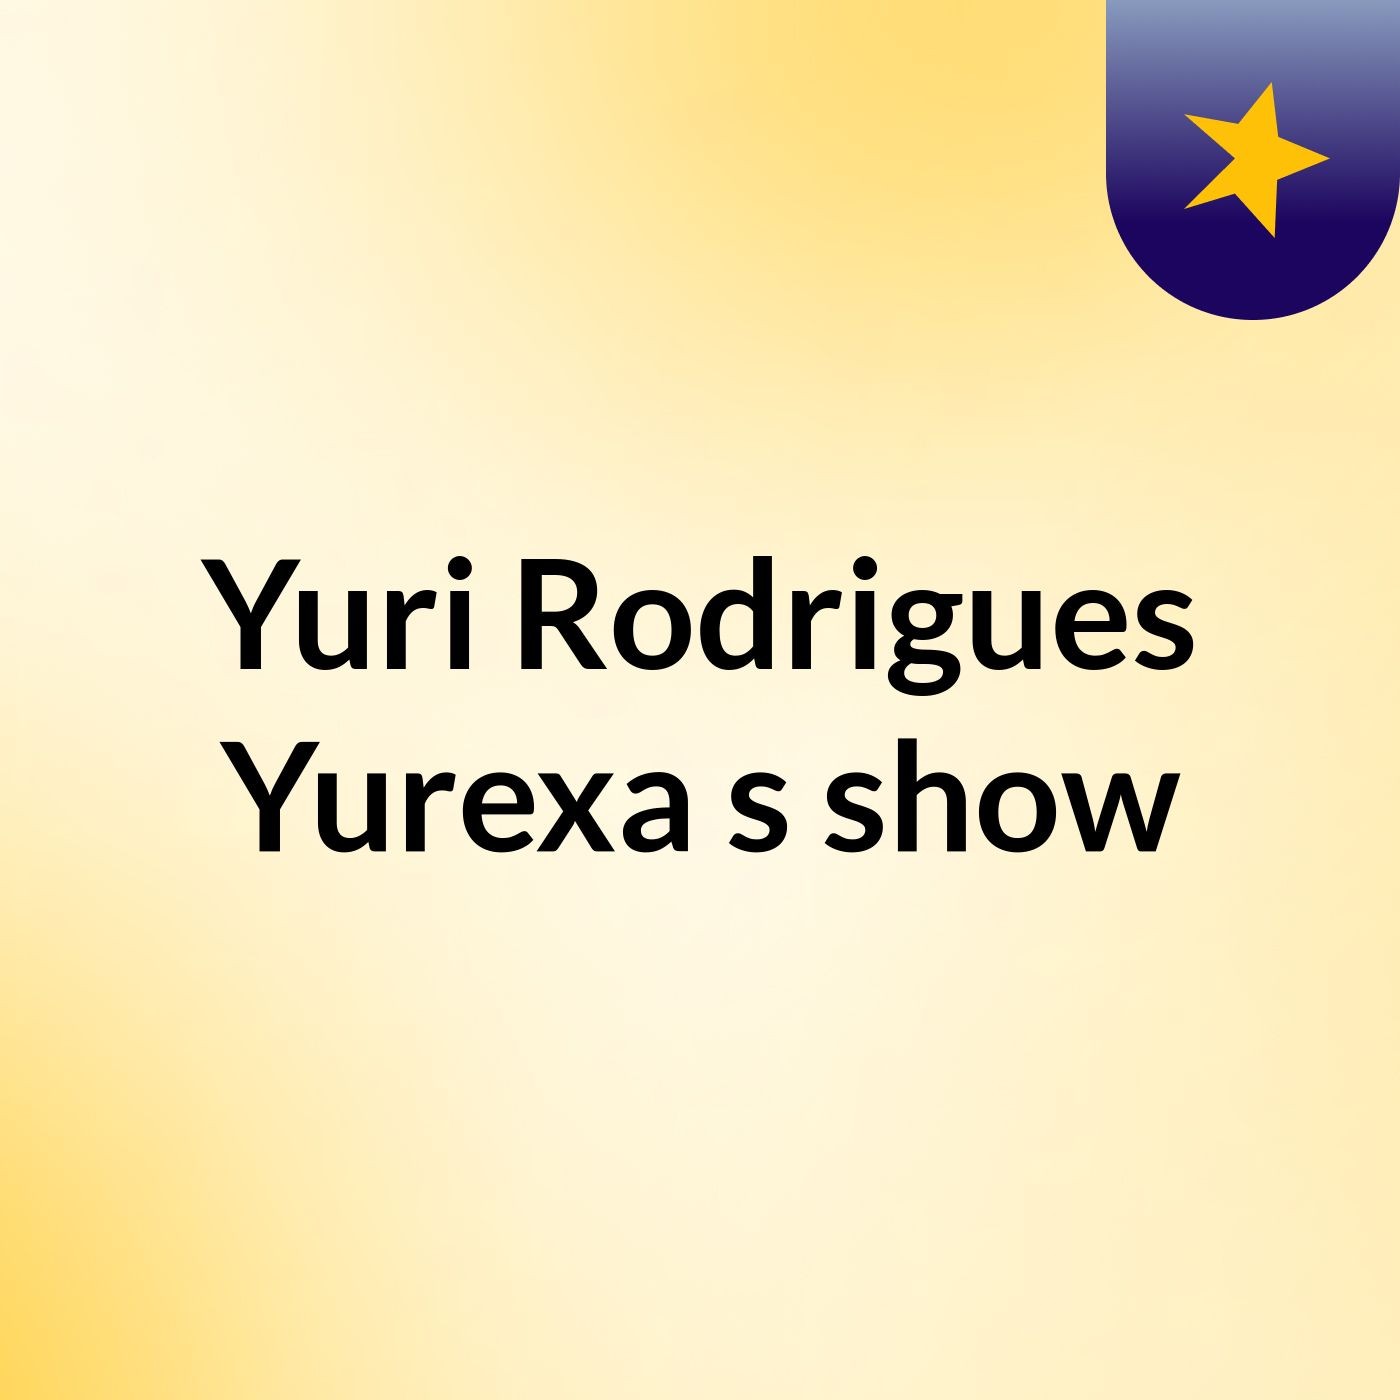 Yuri Rodrigues Yurexa's show